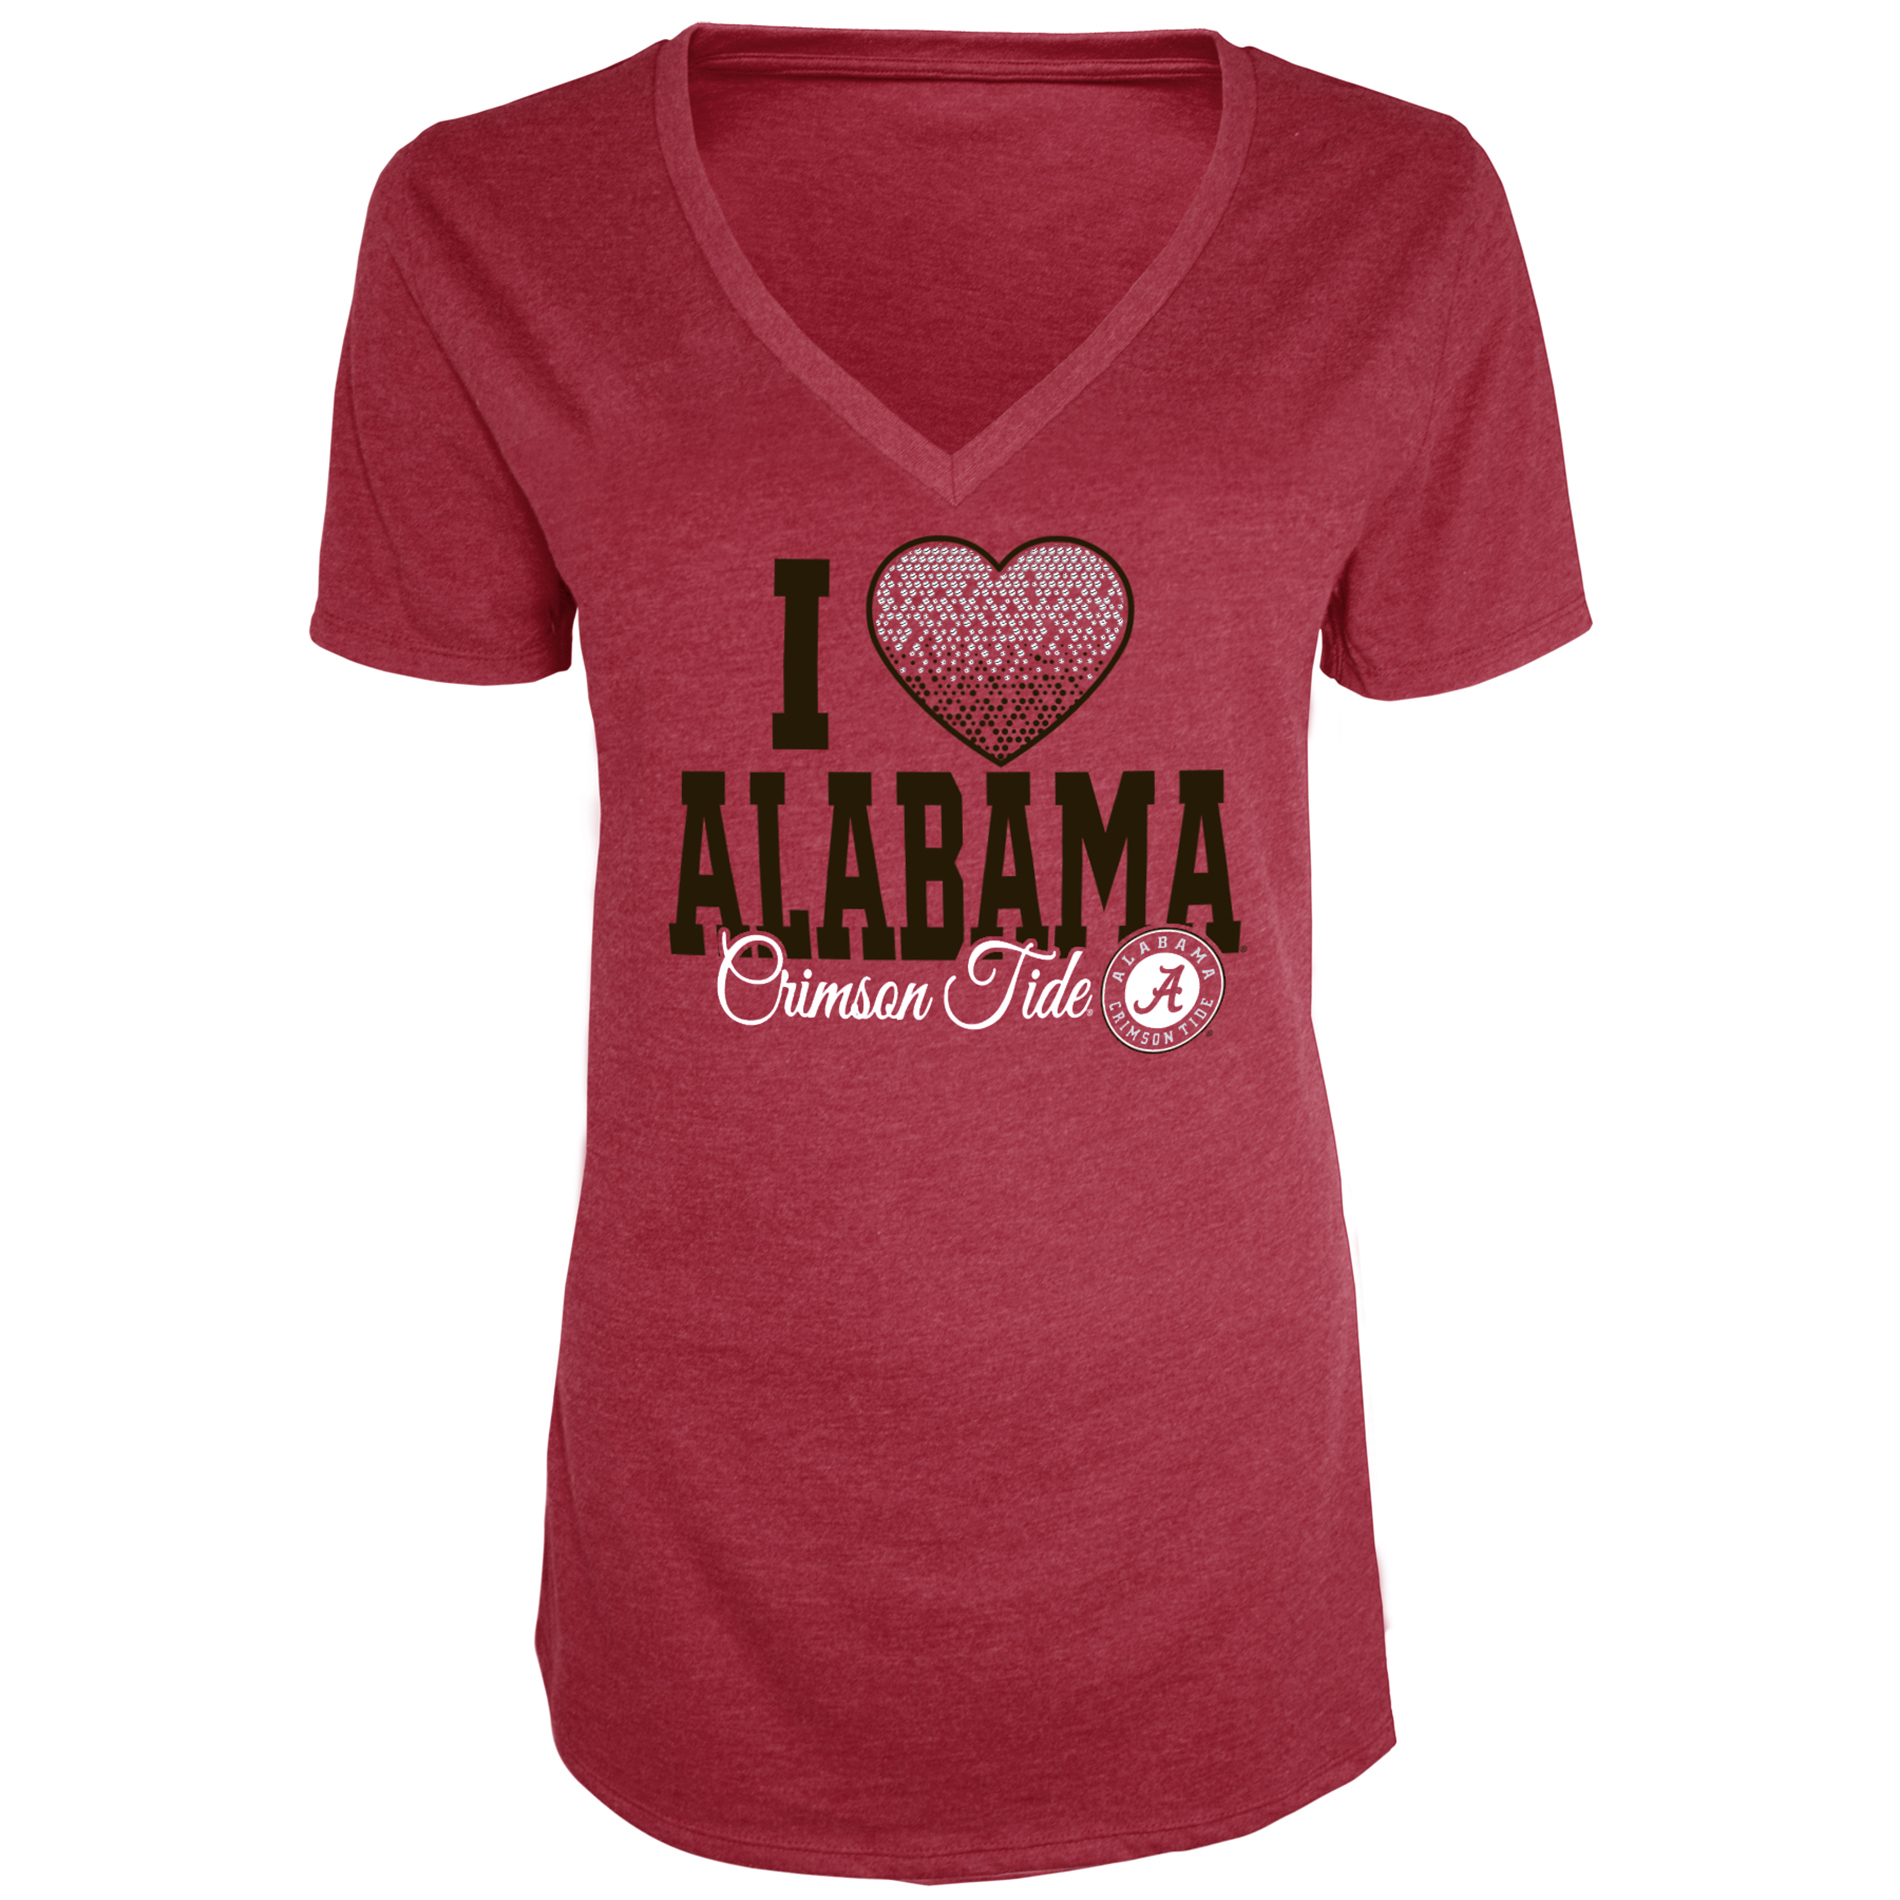 NCAA Alabama Crimson Tide Women's V-neck Tee